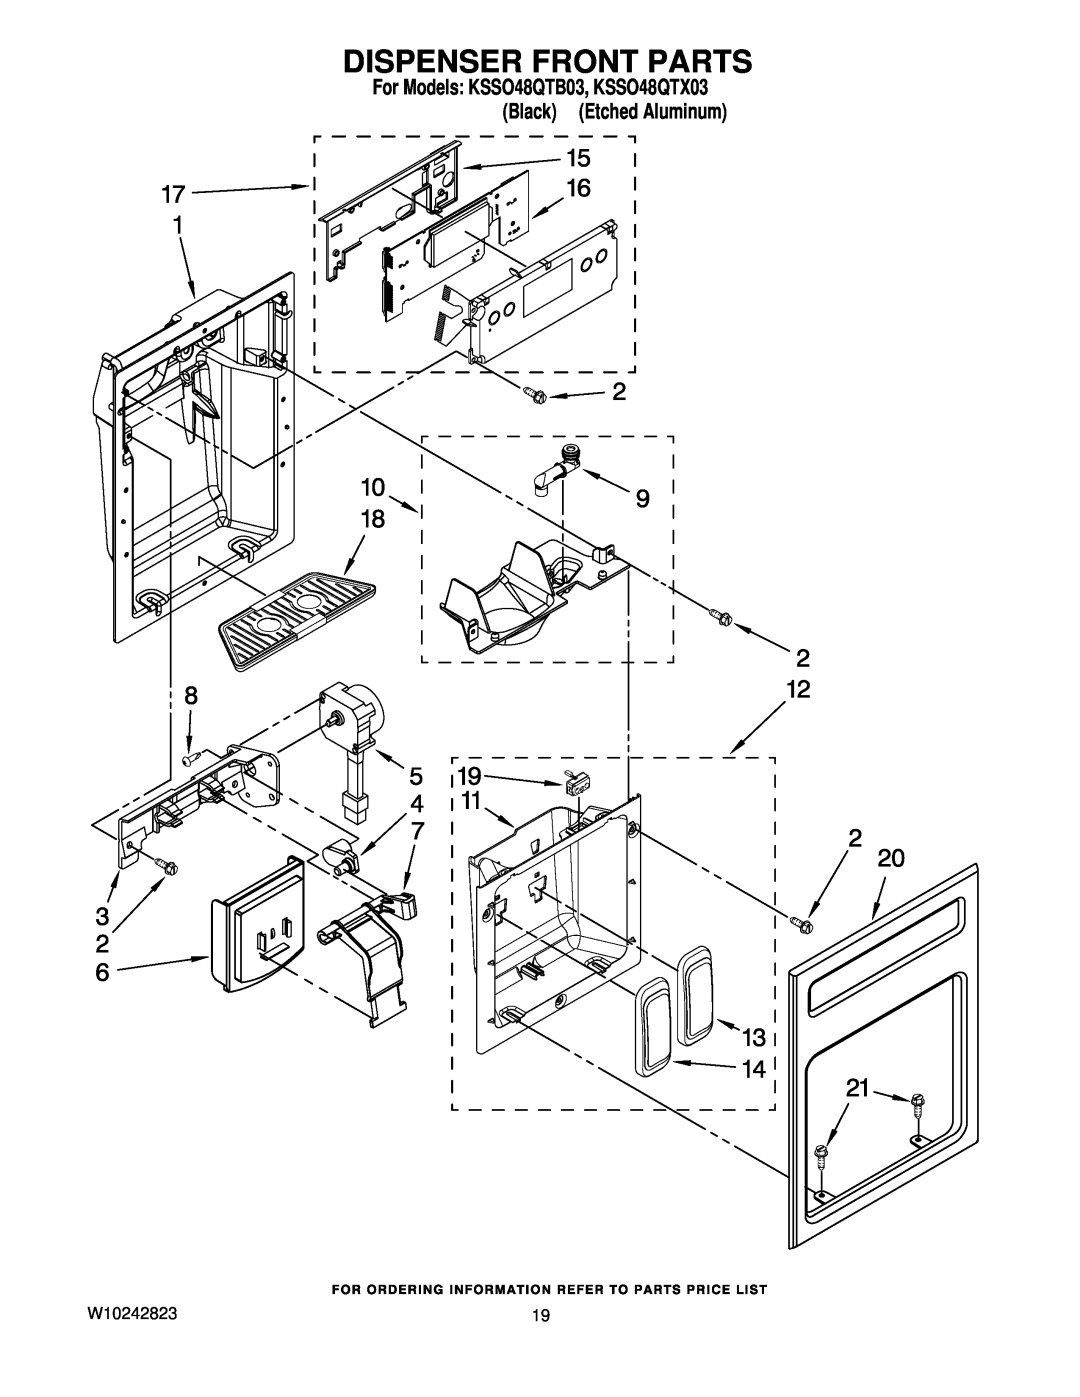 KitchenAid manual Dispenser Front Parts, For Models KSSO48QTB03, KSSO48QTX03 Black Etched Aluminum 